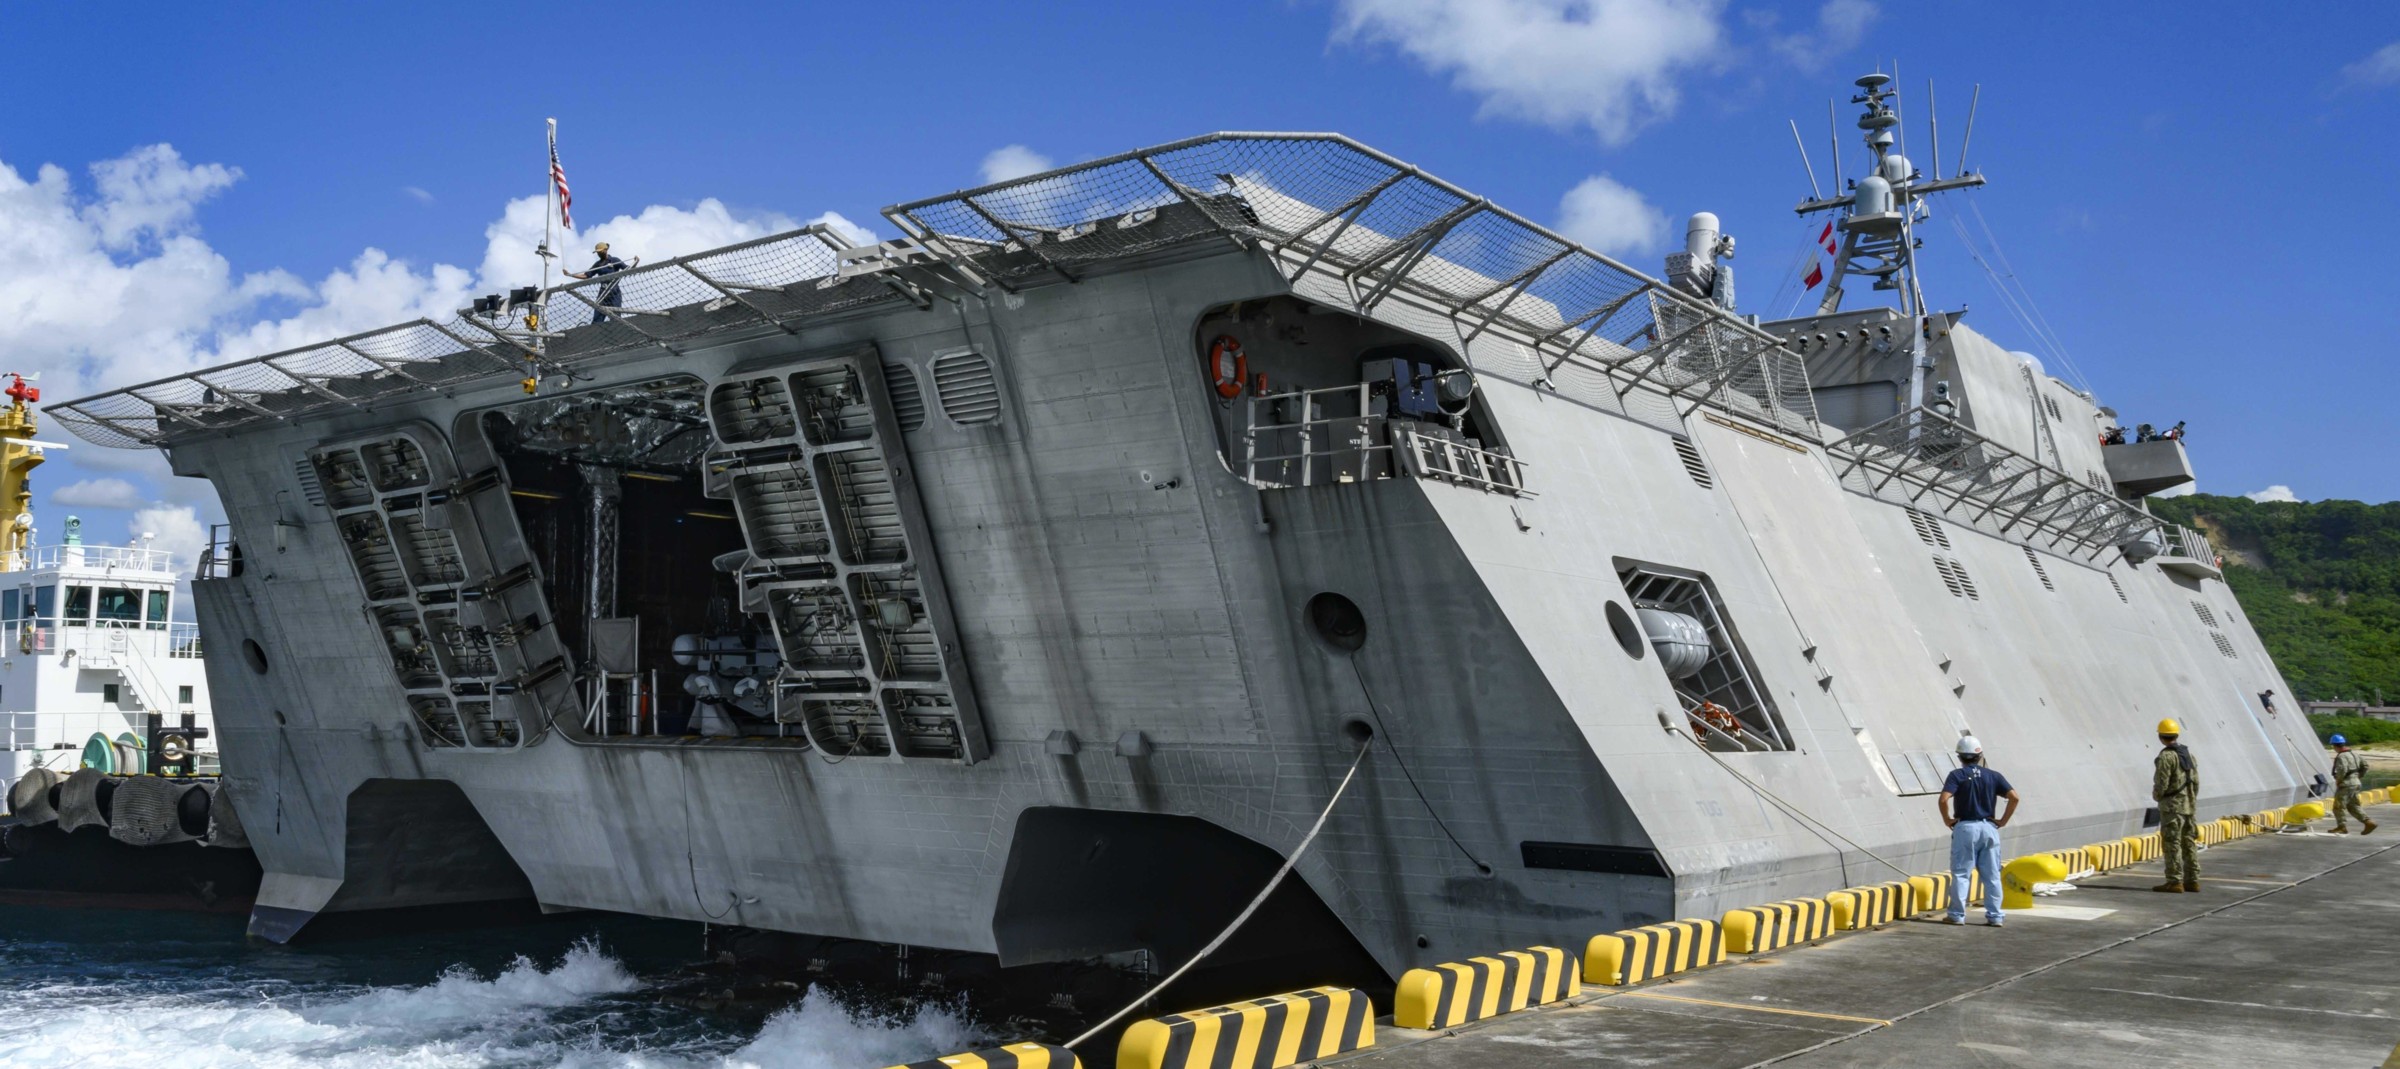 lcs-16 uss tulsa independence class littoral combat ship us navy white beach naval base okinawa japan 39